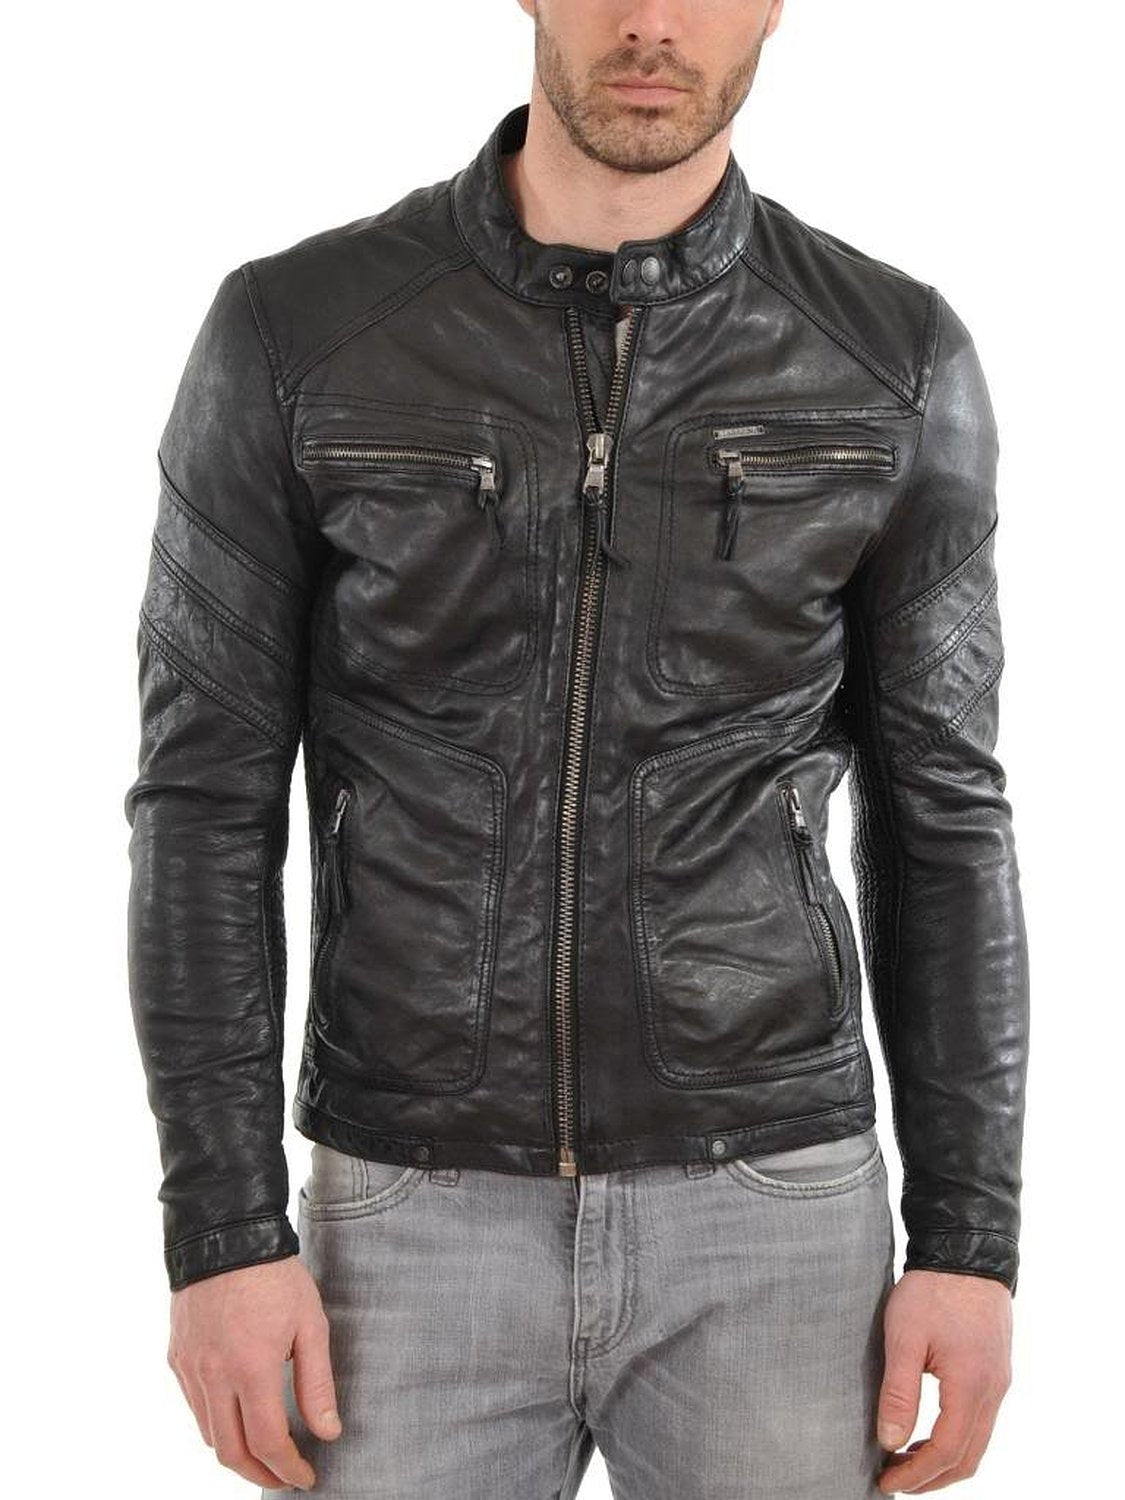 Leather Jackets Hub Mens Genuine Lambskin Leather Jacket (Black, Fencing Jacket) - 1501339